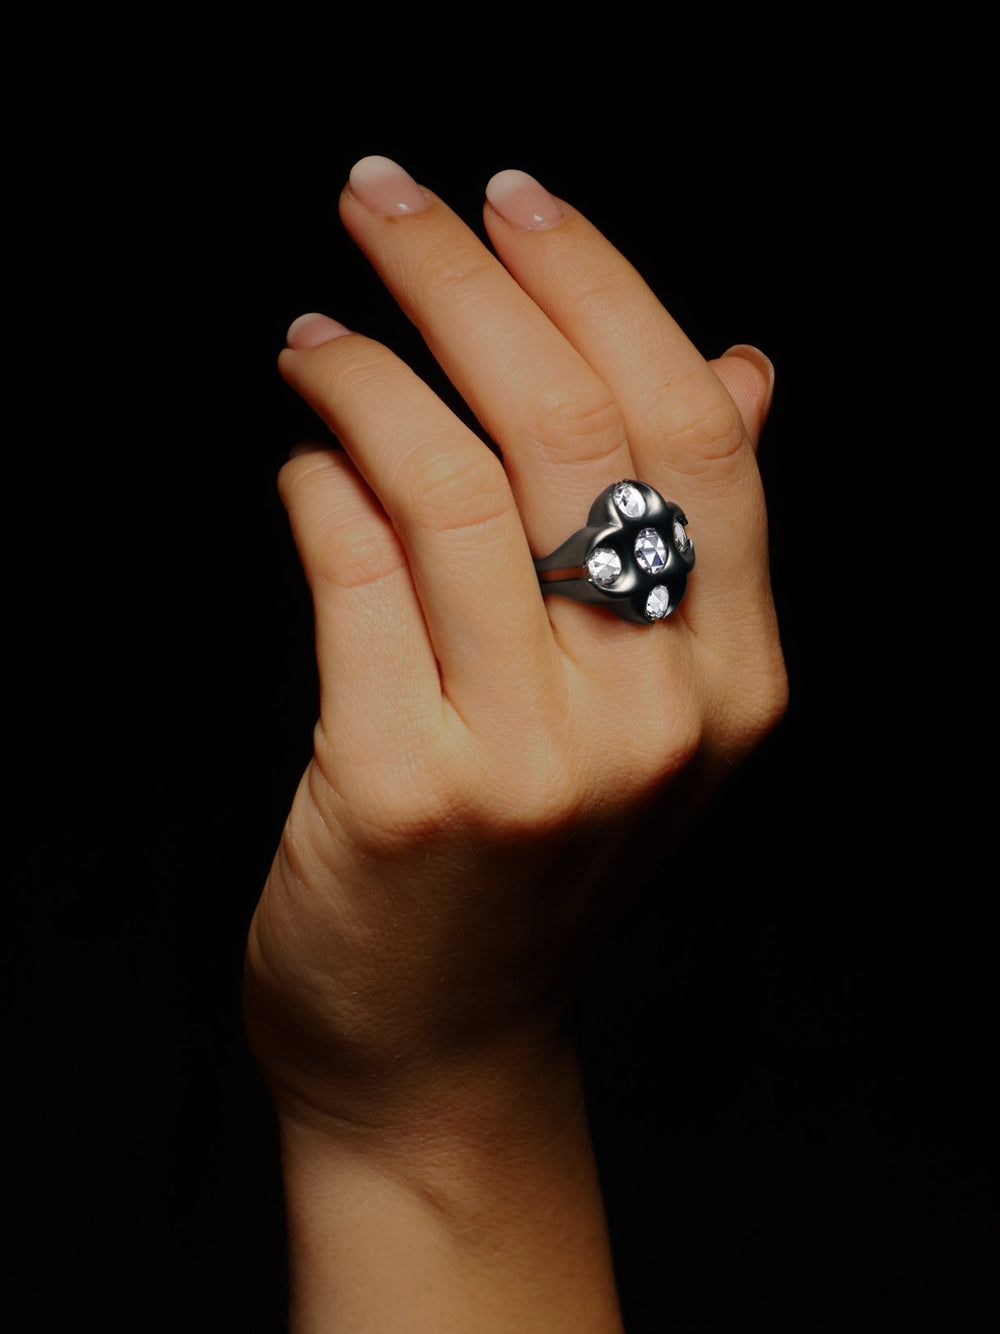 Diamond horns ring by Solange Azagury-Partridge, Diamond Blackened White Gold and rose cuts diamonds - styling on model hand